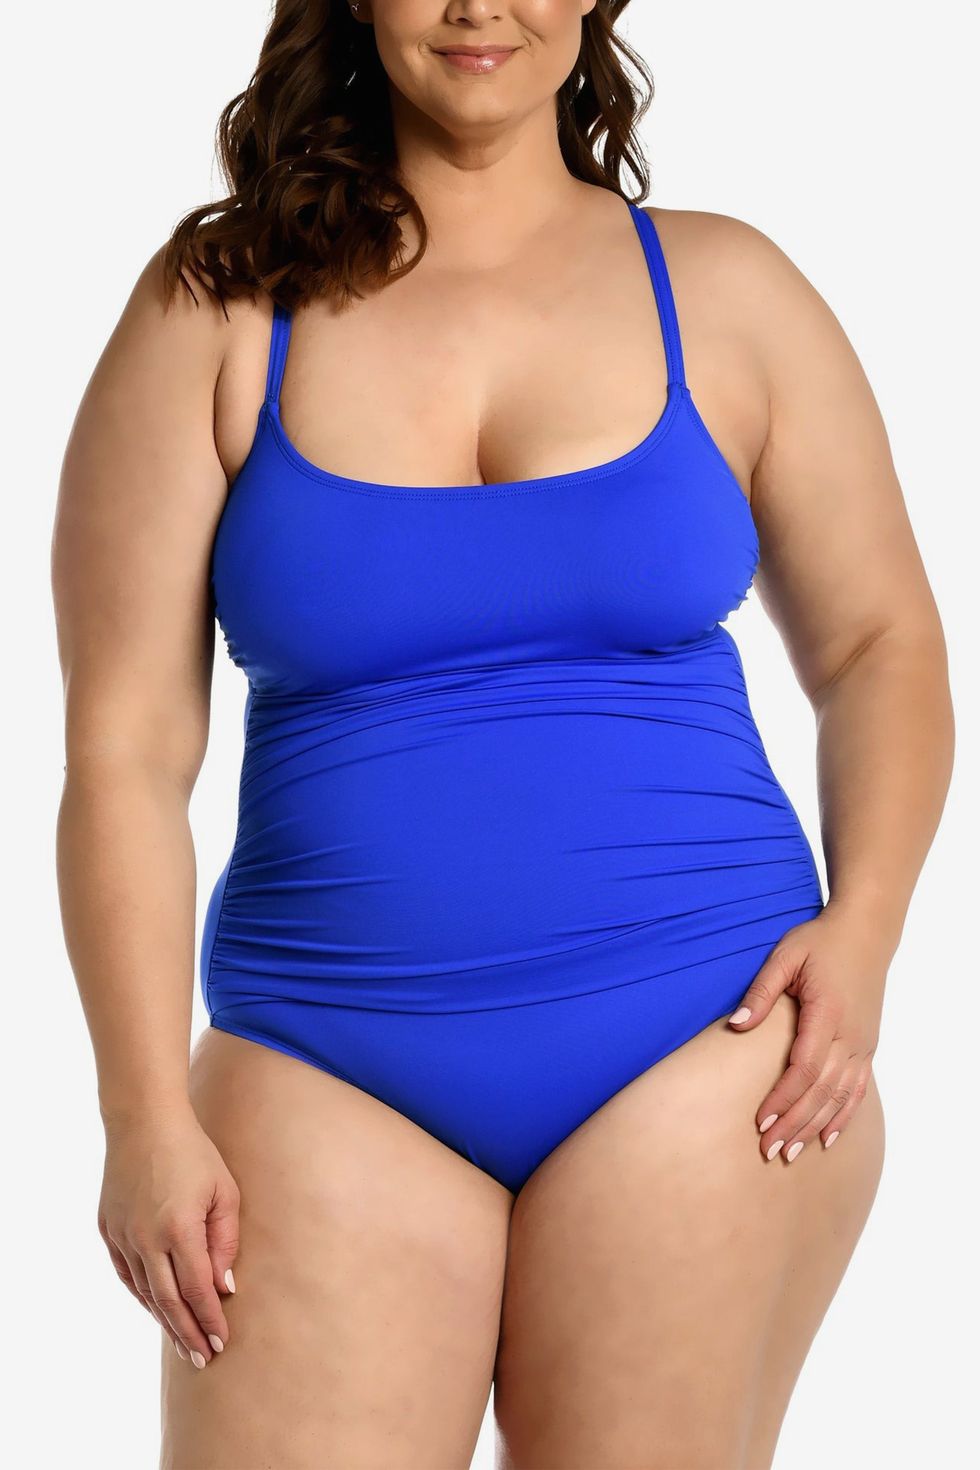 Venus Waist Slimming One Piece Swimsuit (Plus Sizes available